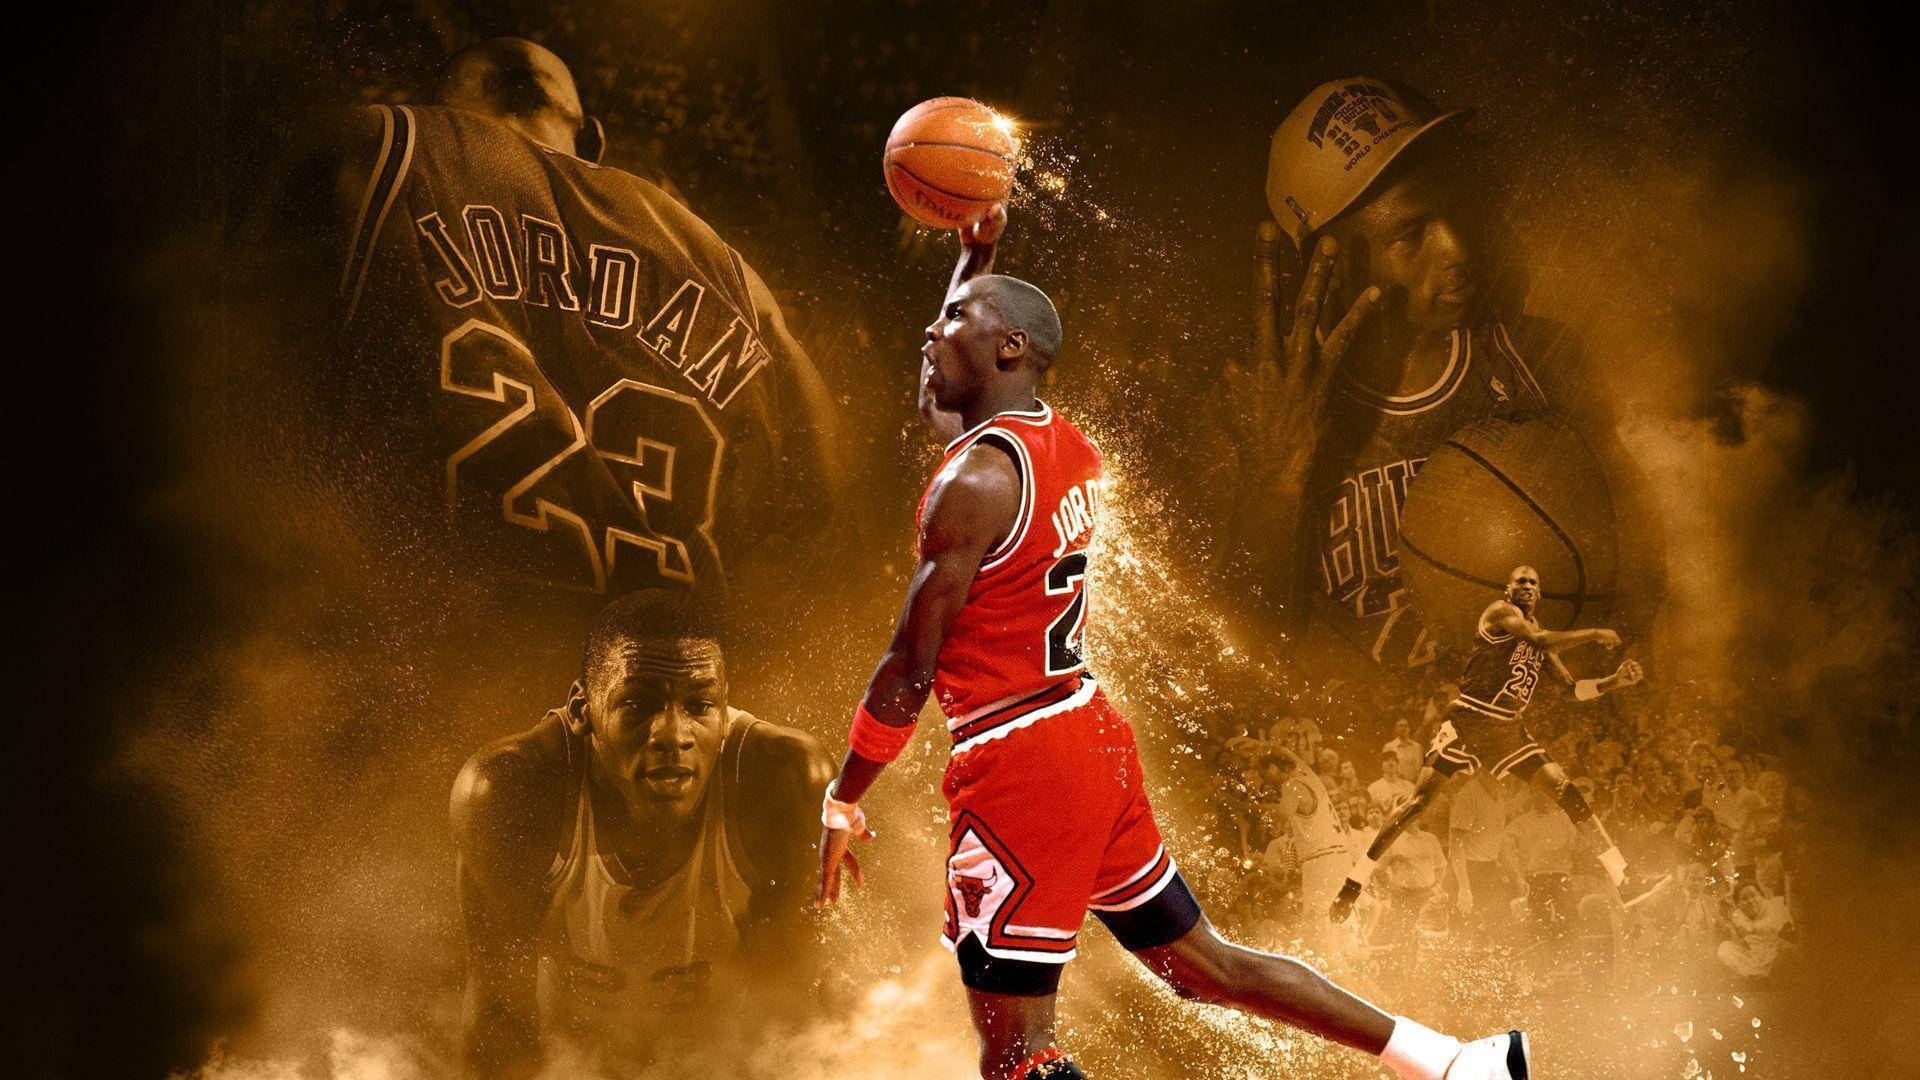 Leggendarioatleta, #23 Michael Jordan. Sfondo